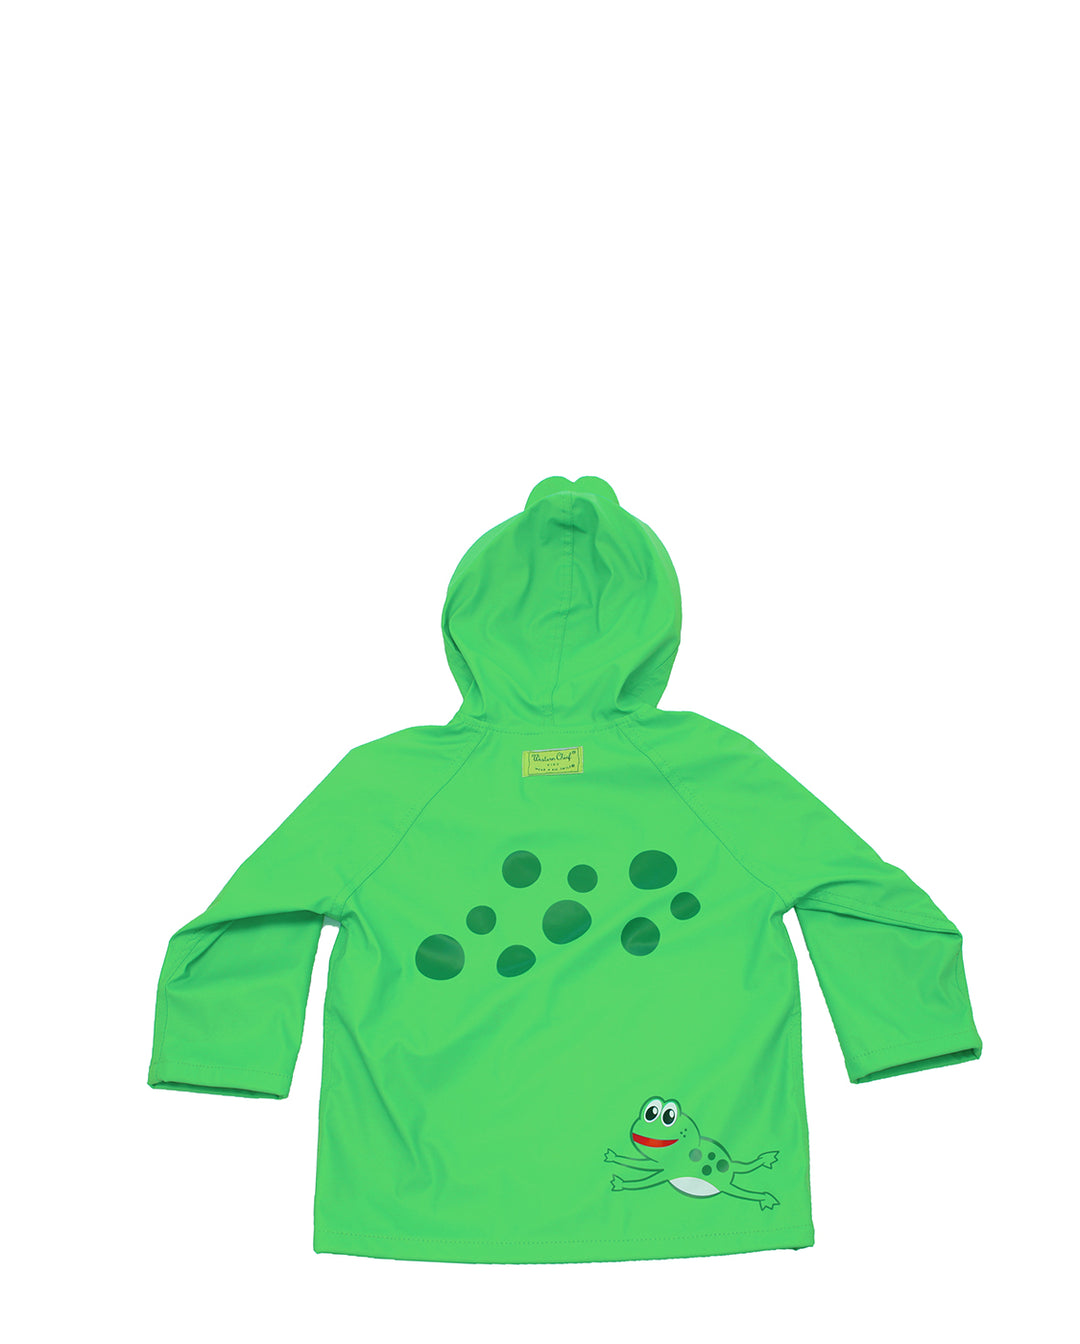 Kids Frog Rain Coat - Green